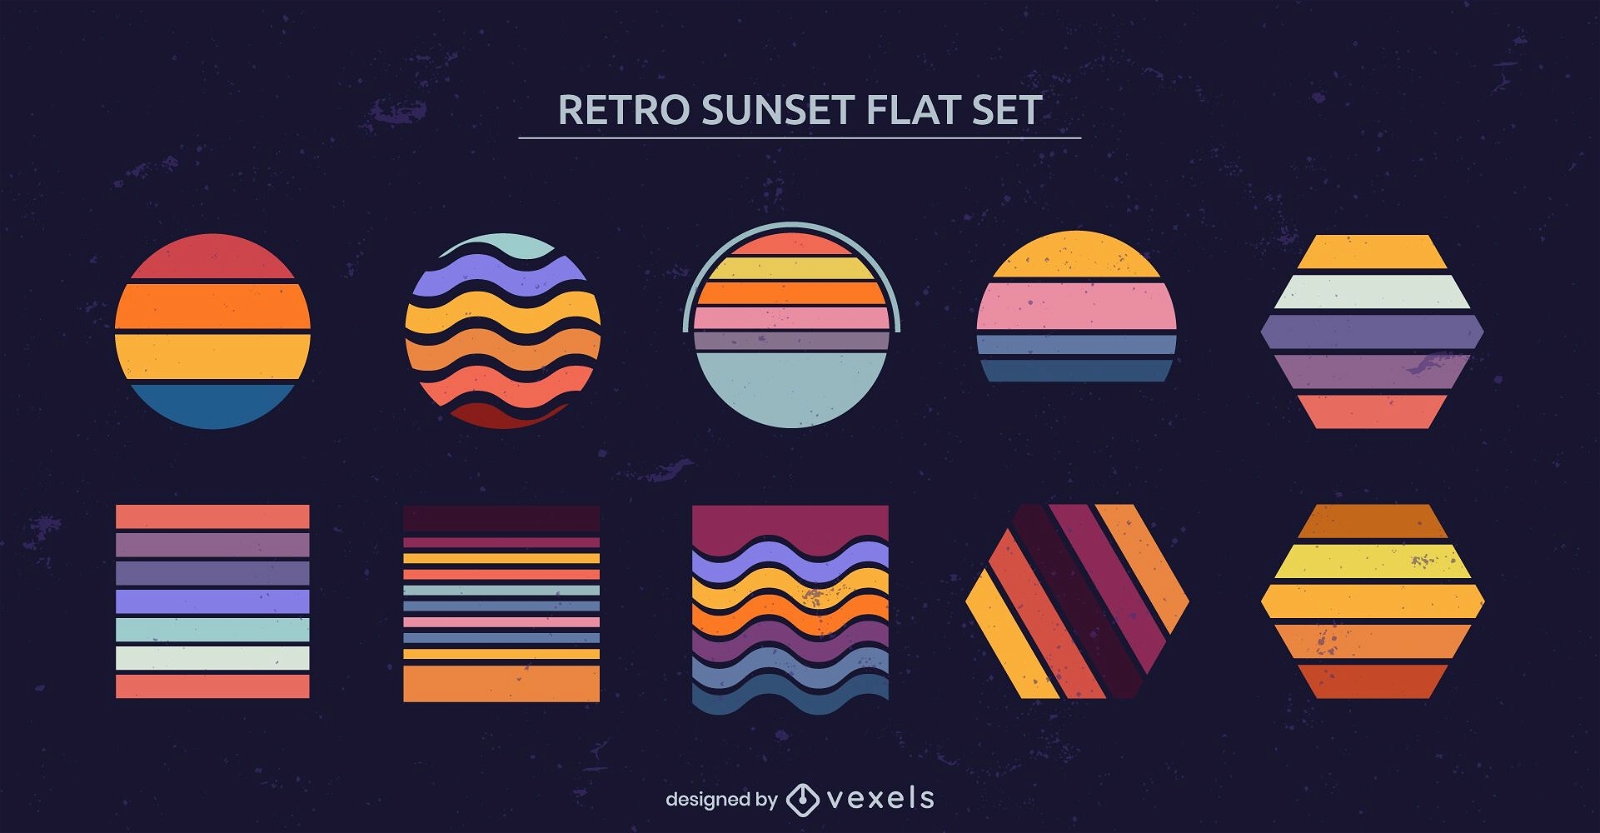 Retro sunset geometric shapes set